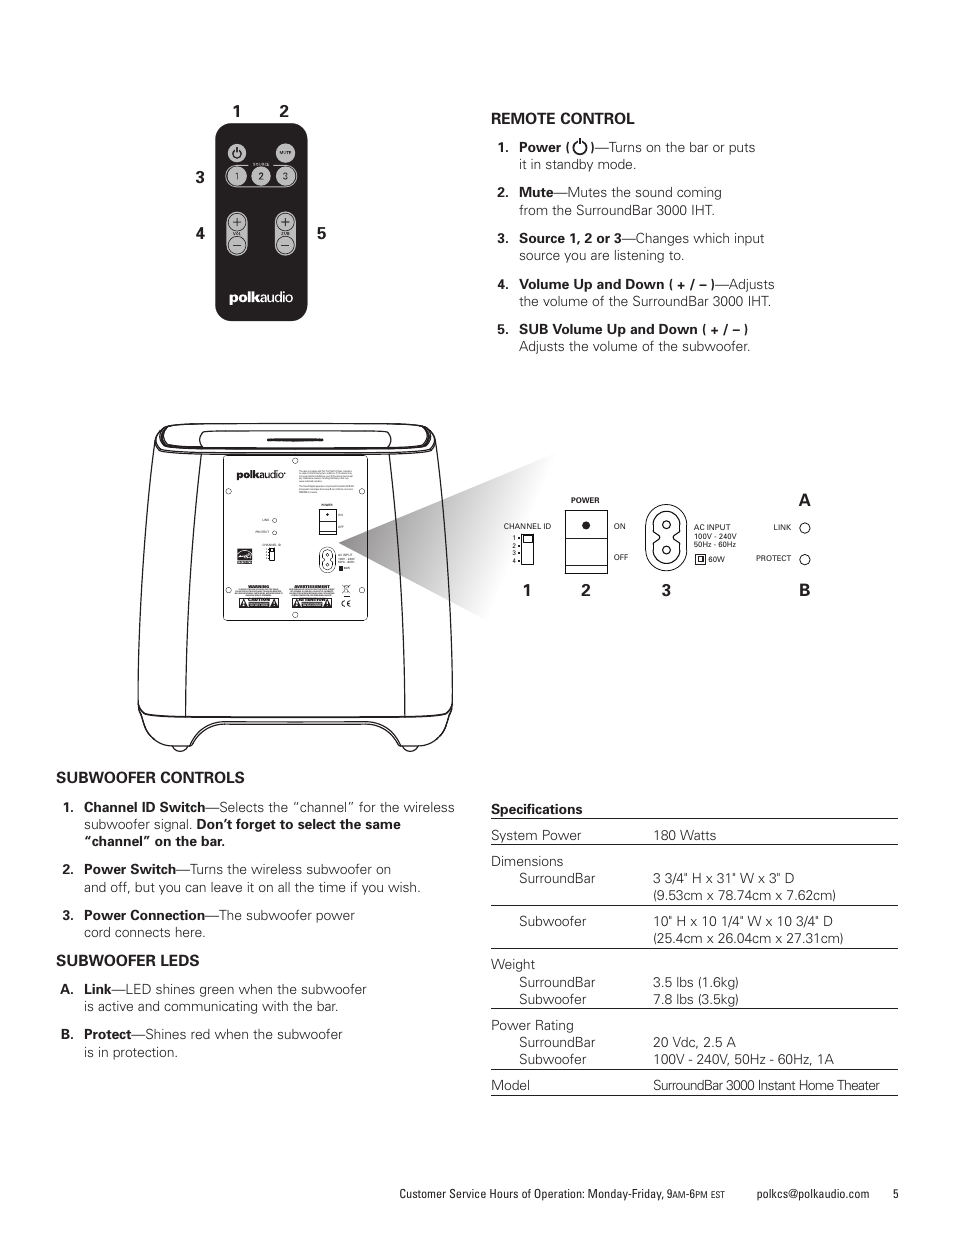 Ab 1 2 3 | Polk Audio SURROUNDBAR 3000 User Manual | Page 5 / 12